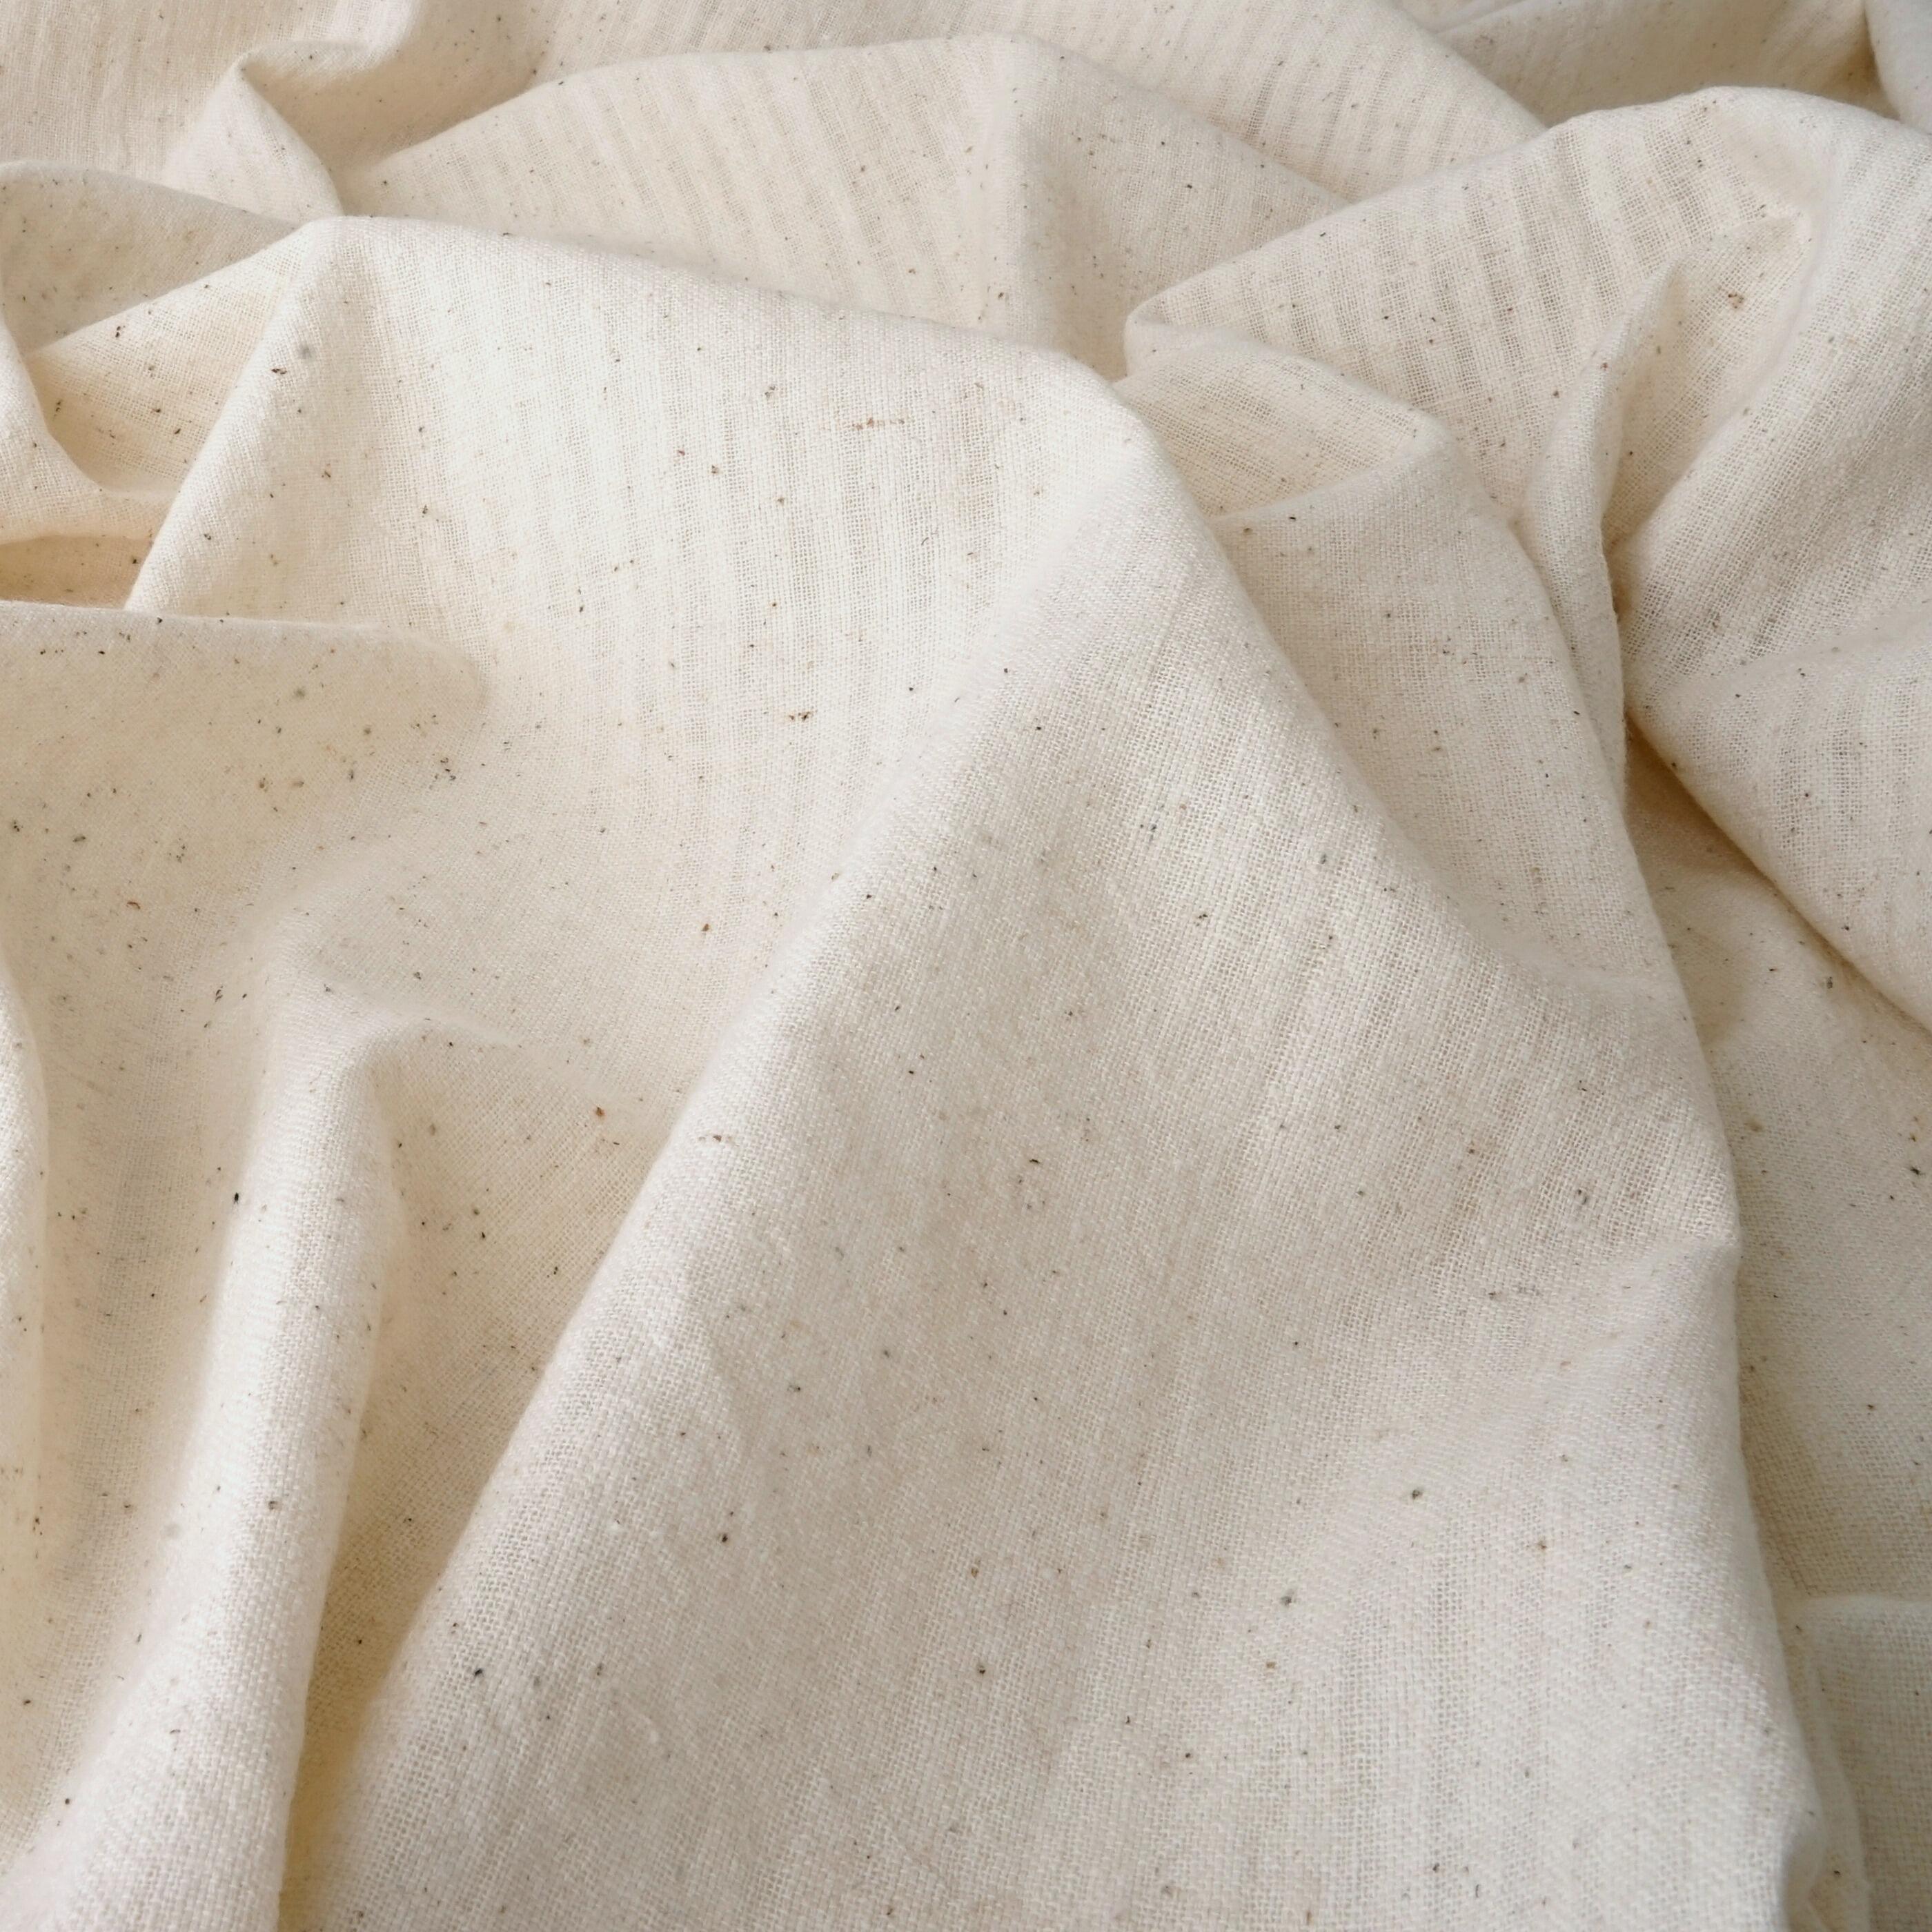 1 - RAM01 - Organic Kala Cotton - Unbleached, Undyed - Handloom Woven -  Single & Double Warp, Single Weft - Striped - Dented Weave - Contrast